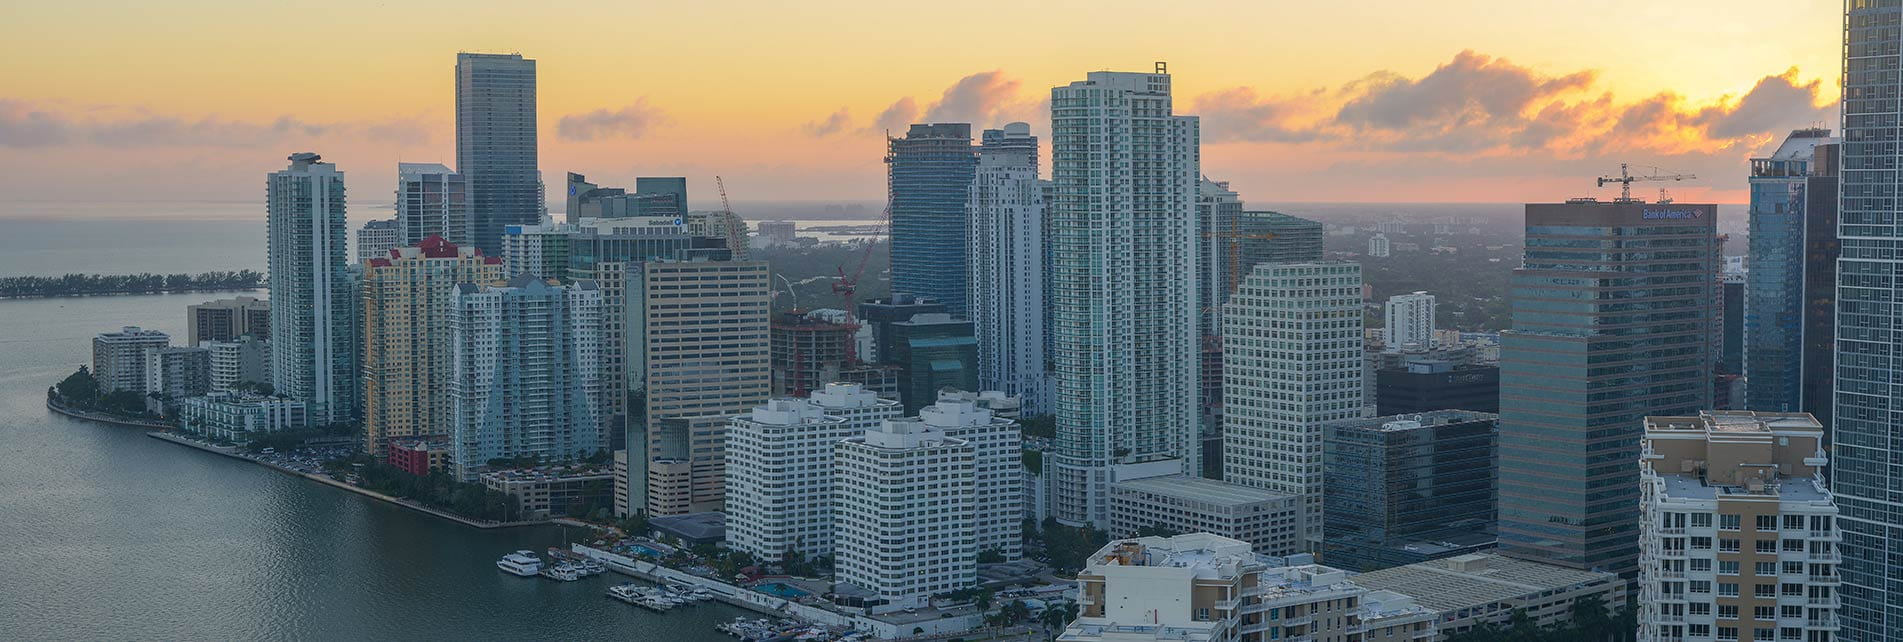 Miami City Shoreline Photo